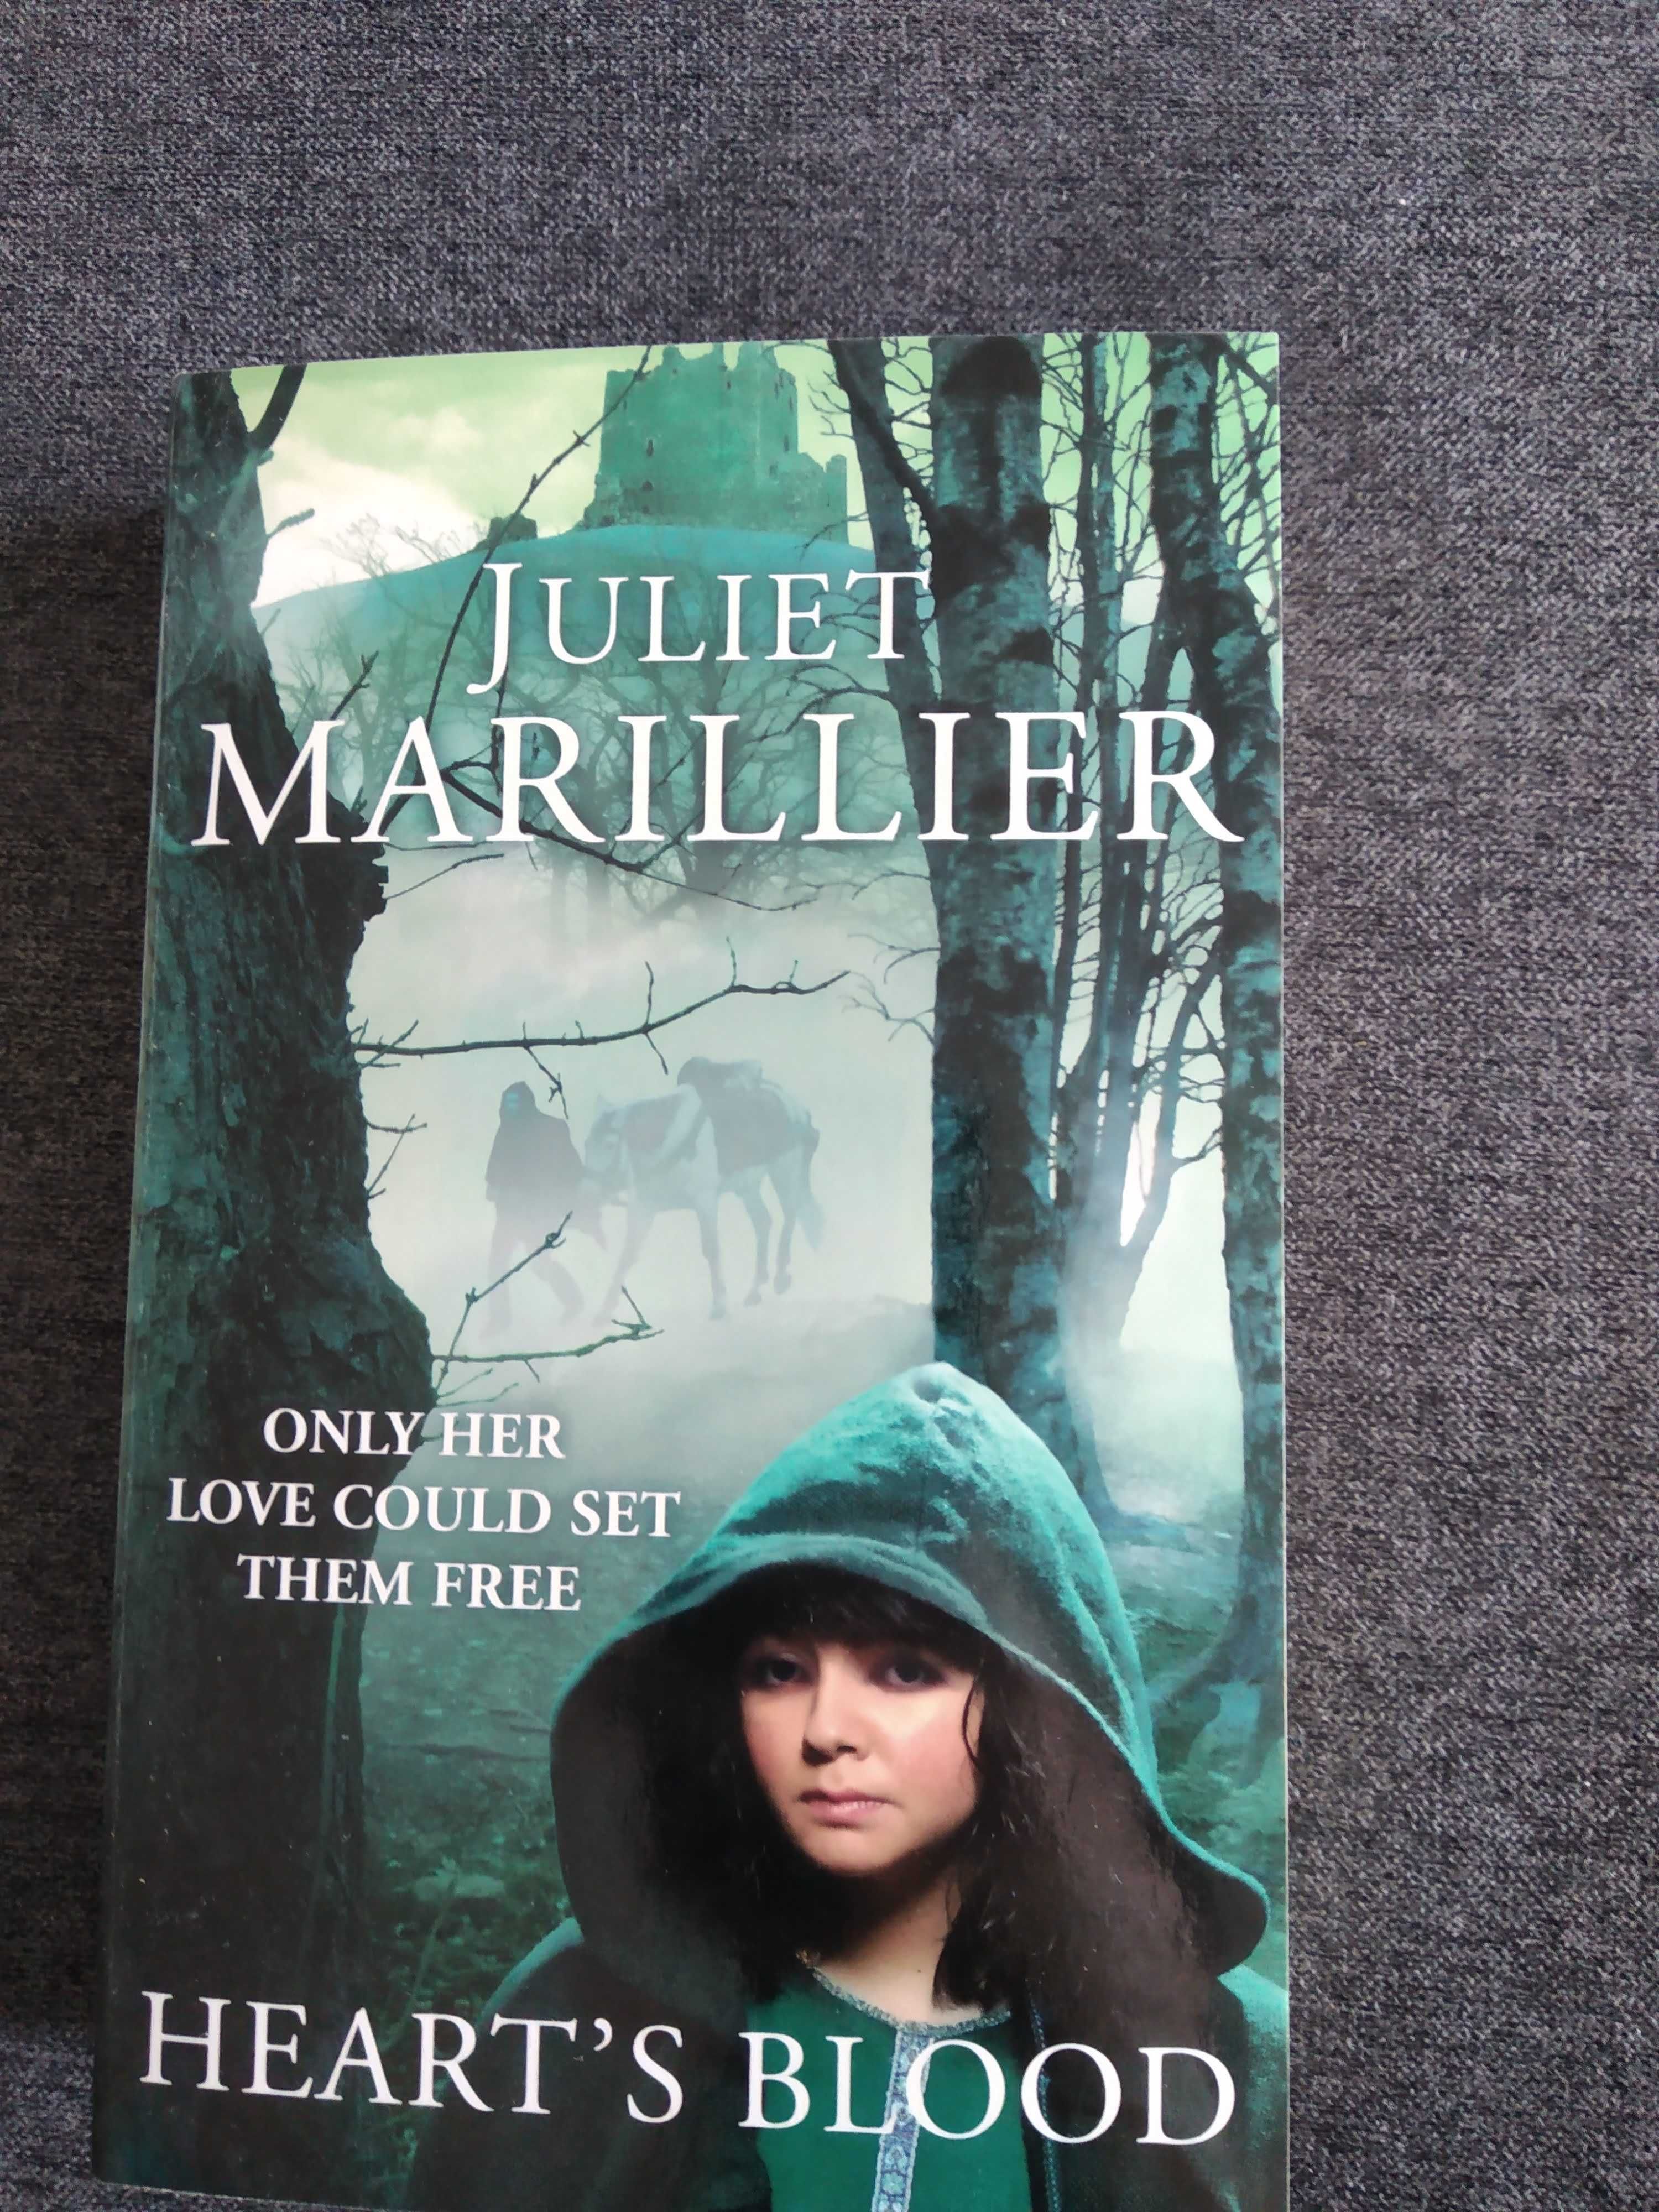 Heart's blood - Juliet Marillier